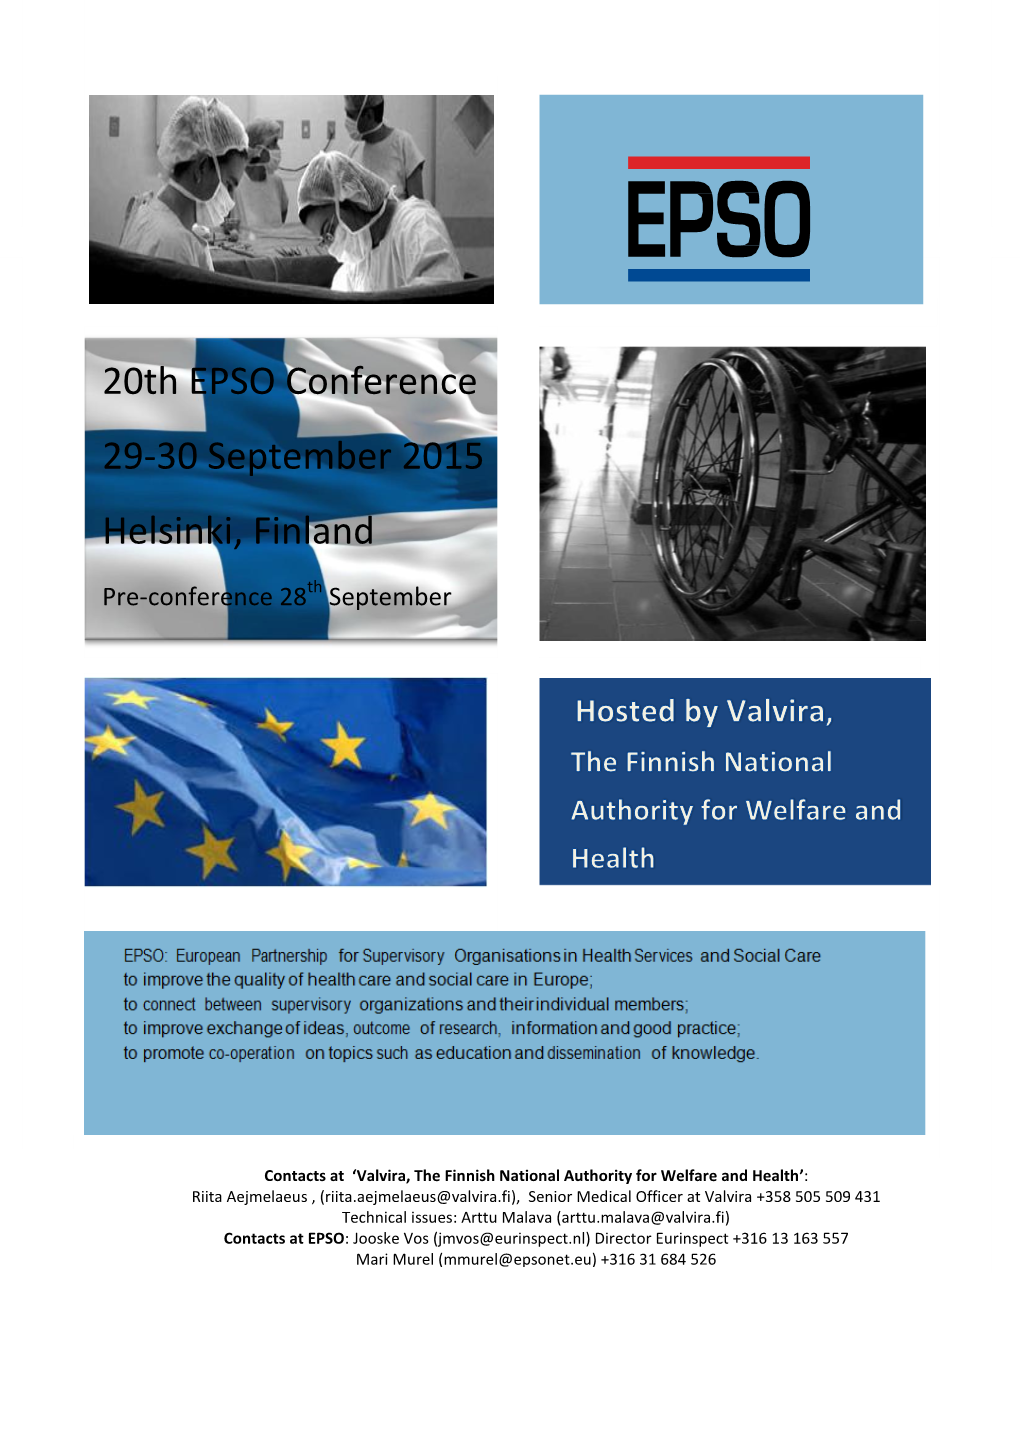 20Th EPSO Conference 29-30 September 2015 Helsinki, Finland